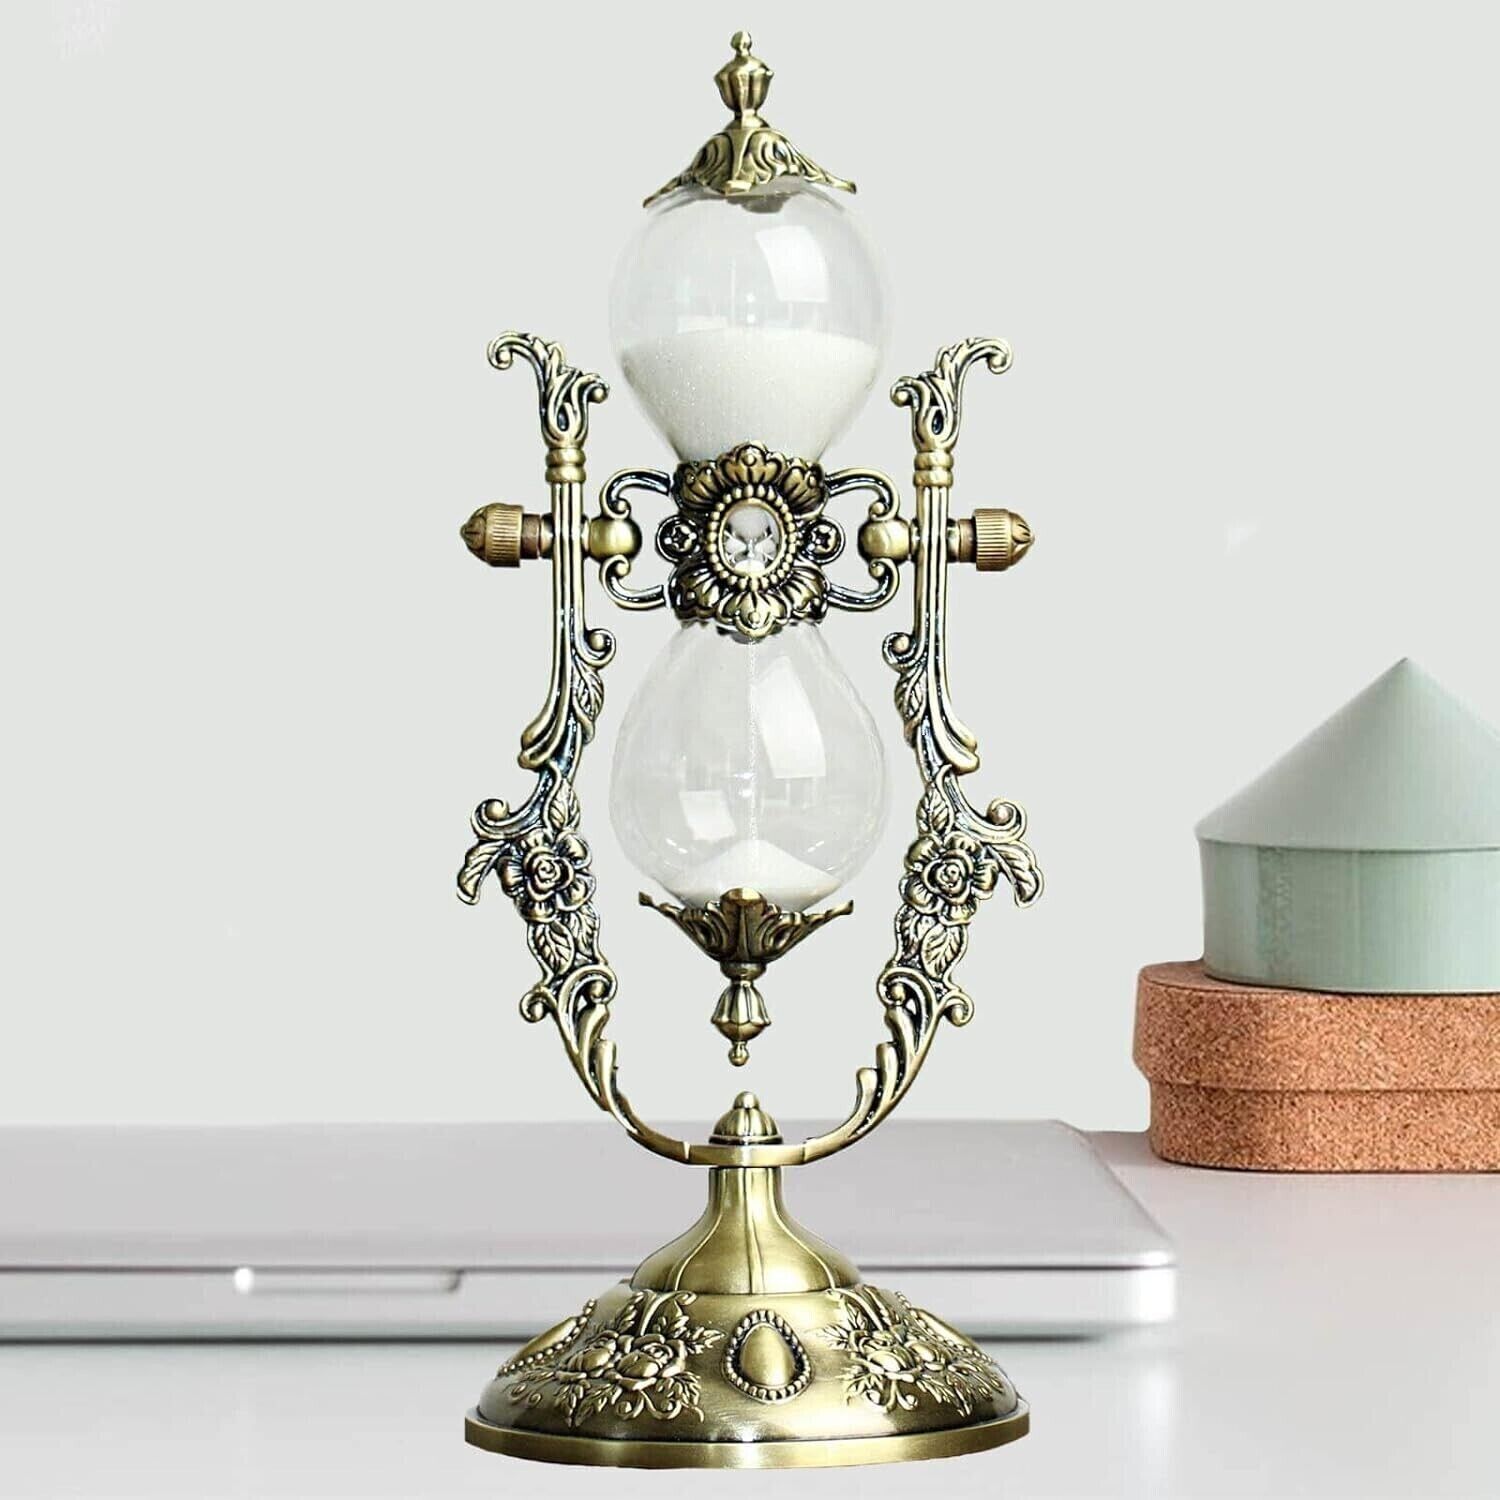 Hourglass Sand Timer 15 Minute,Vintage Engraved Brass Frame White Antique 360°